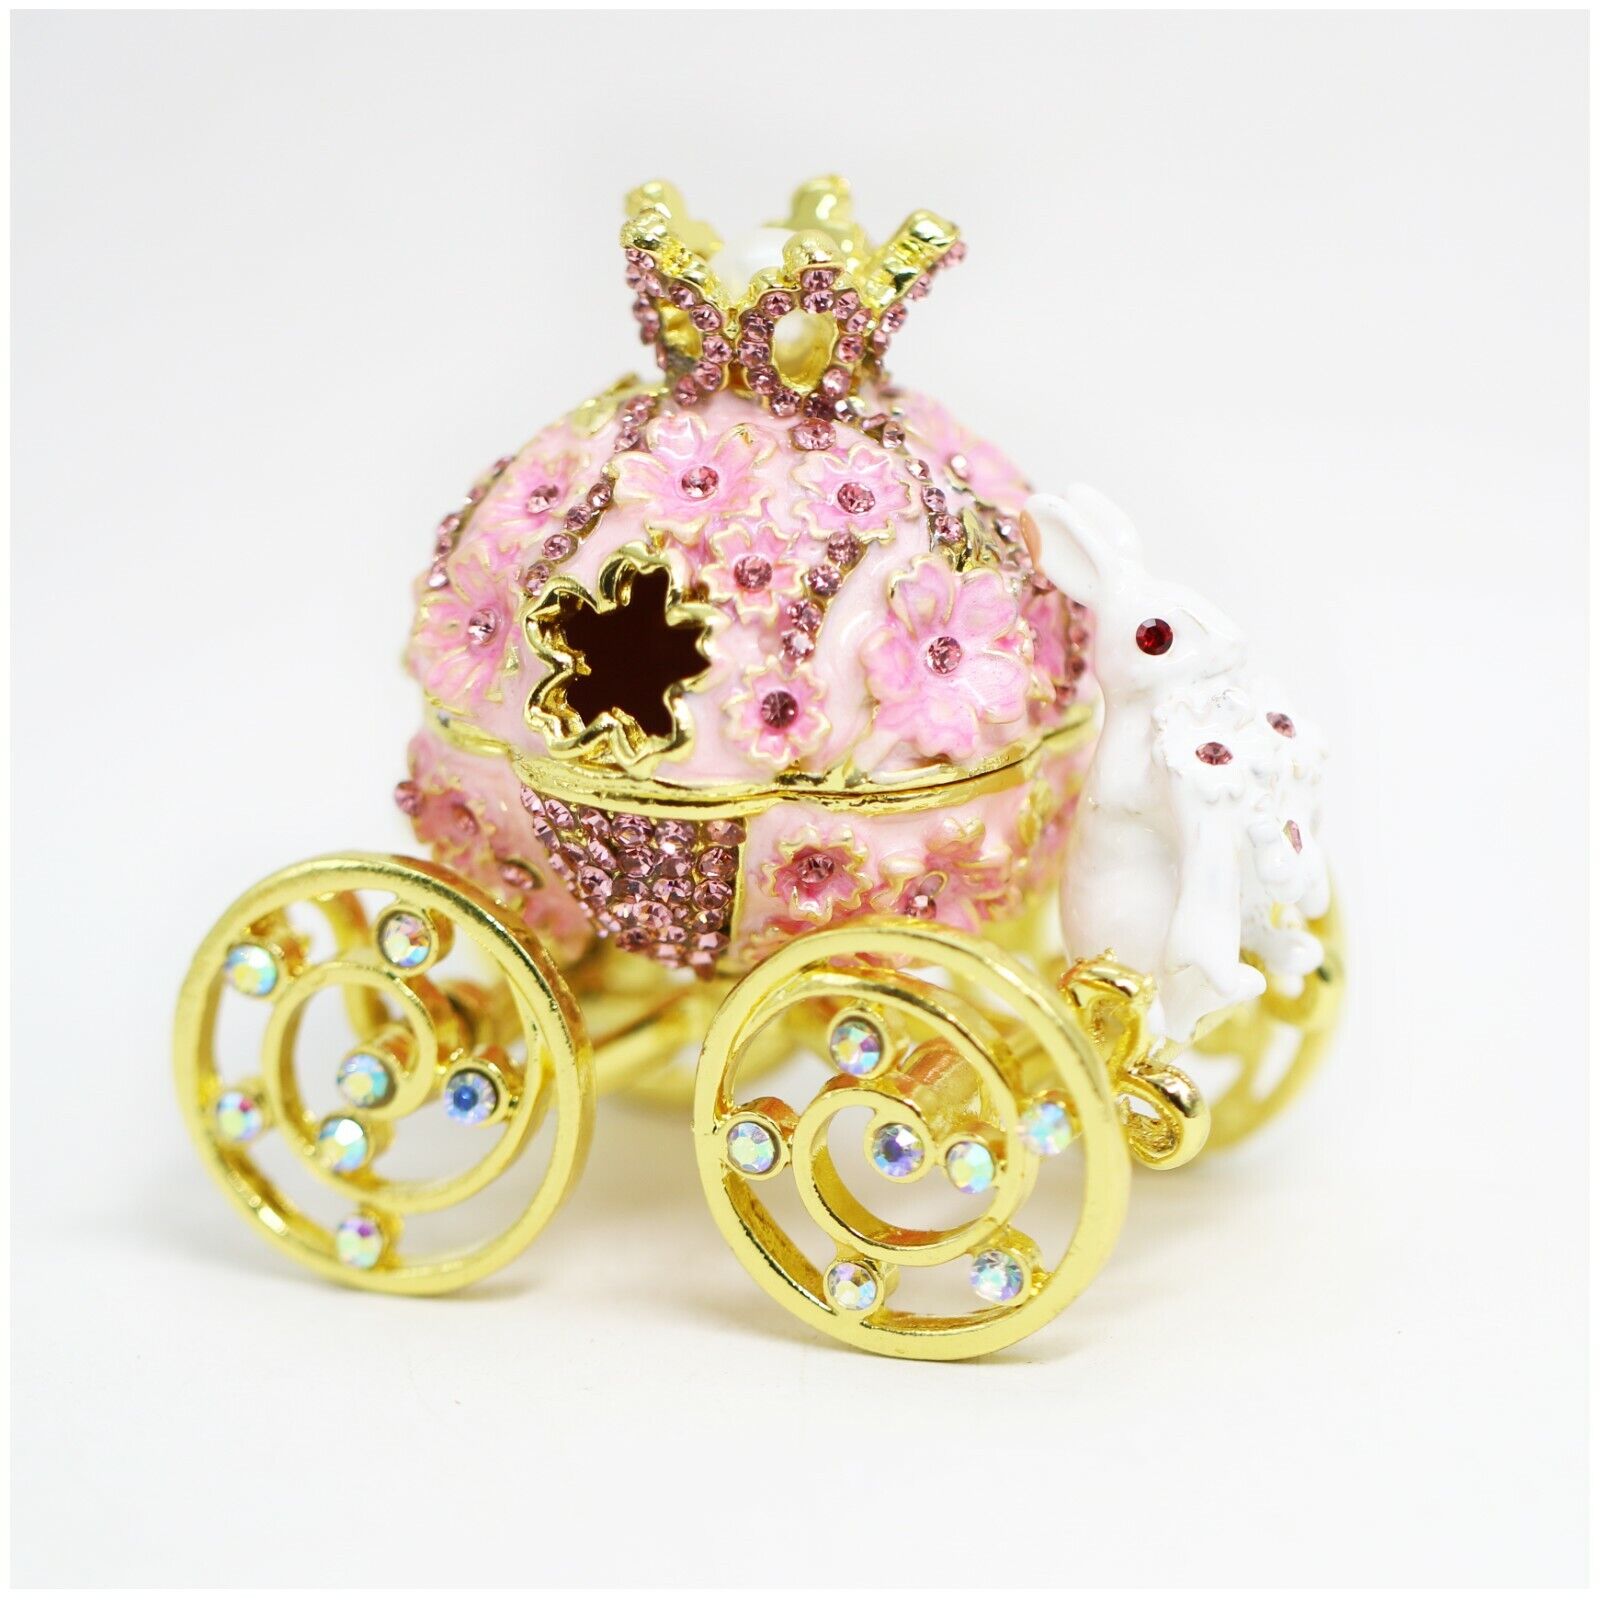 Bejeweled Enameled Trinket Box/Figurine With Rhinestones-Pink Bunny Carriage